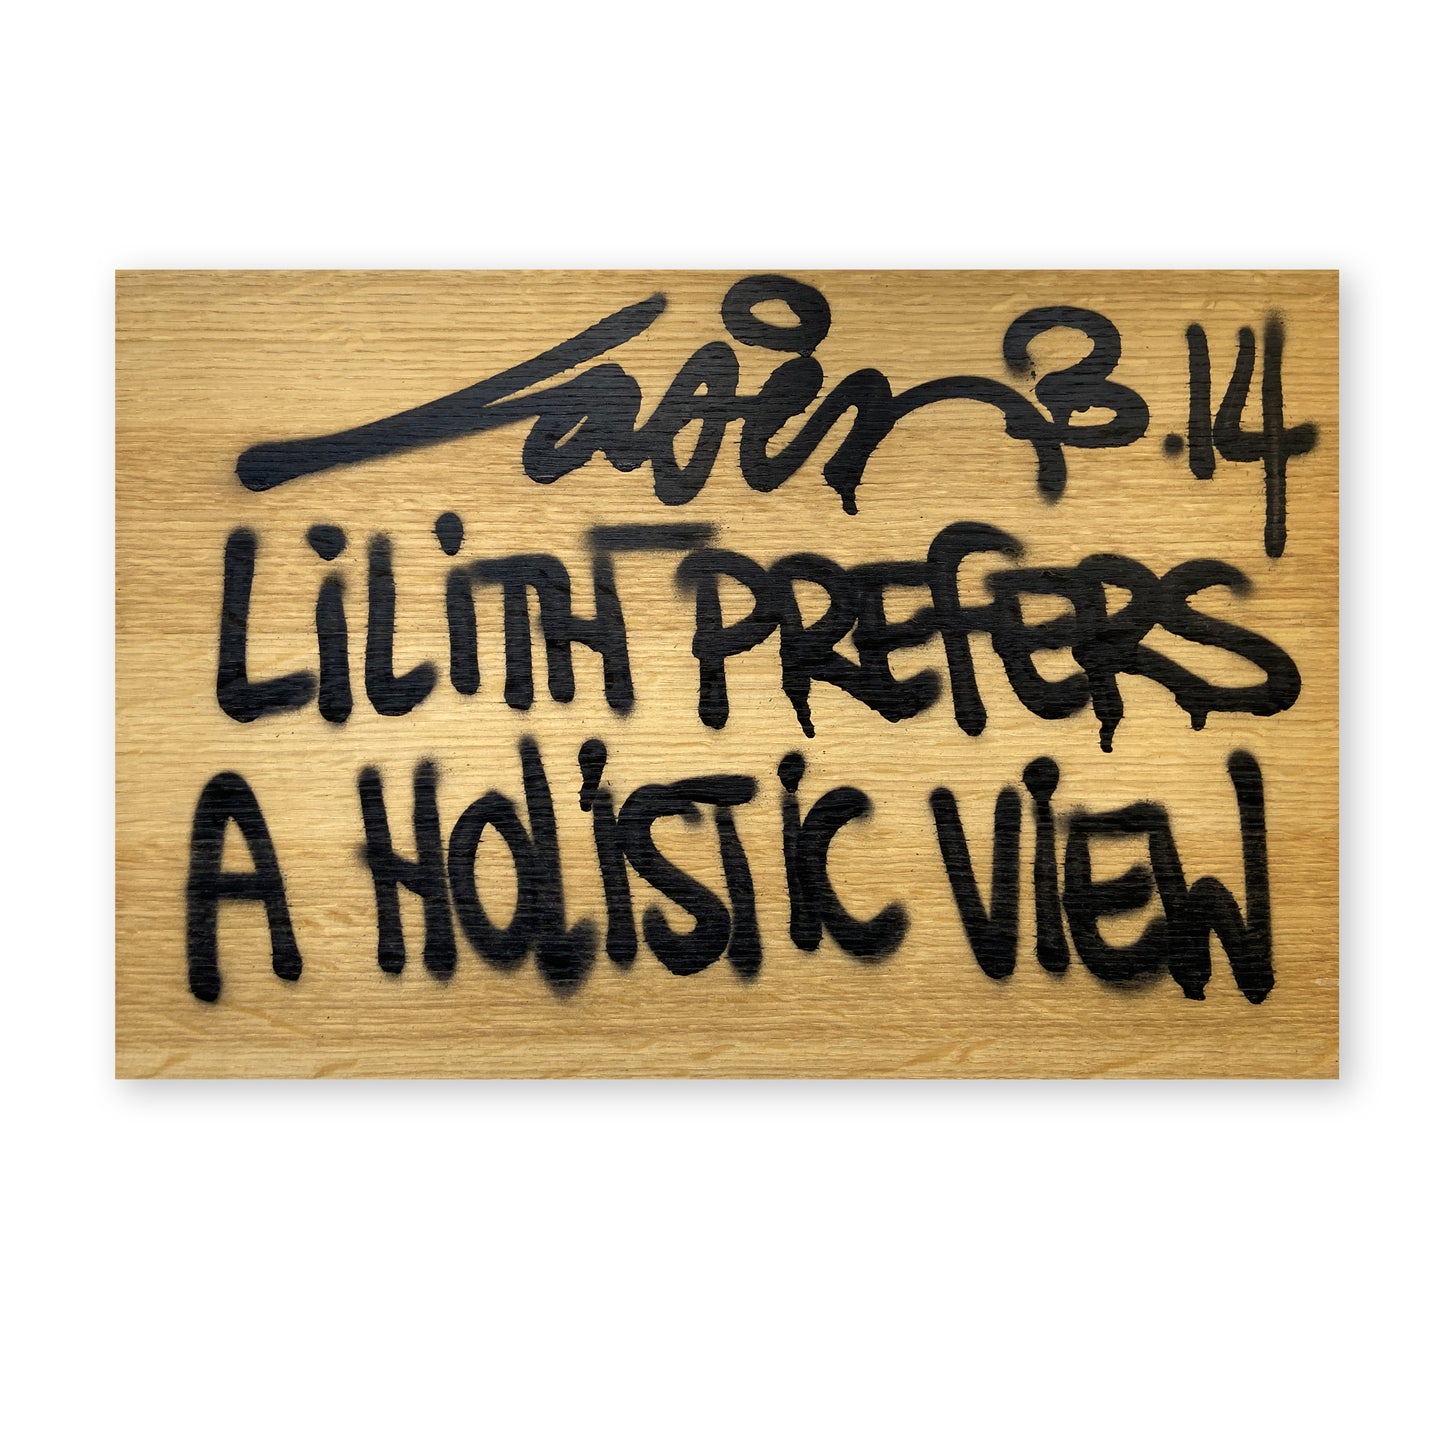 Lilith Prefers A Holistic View